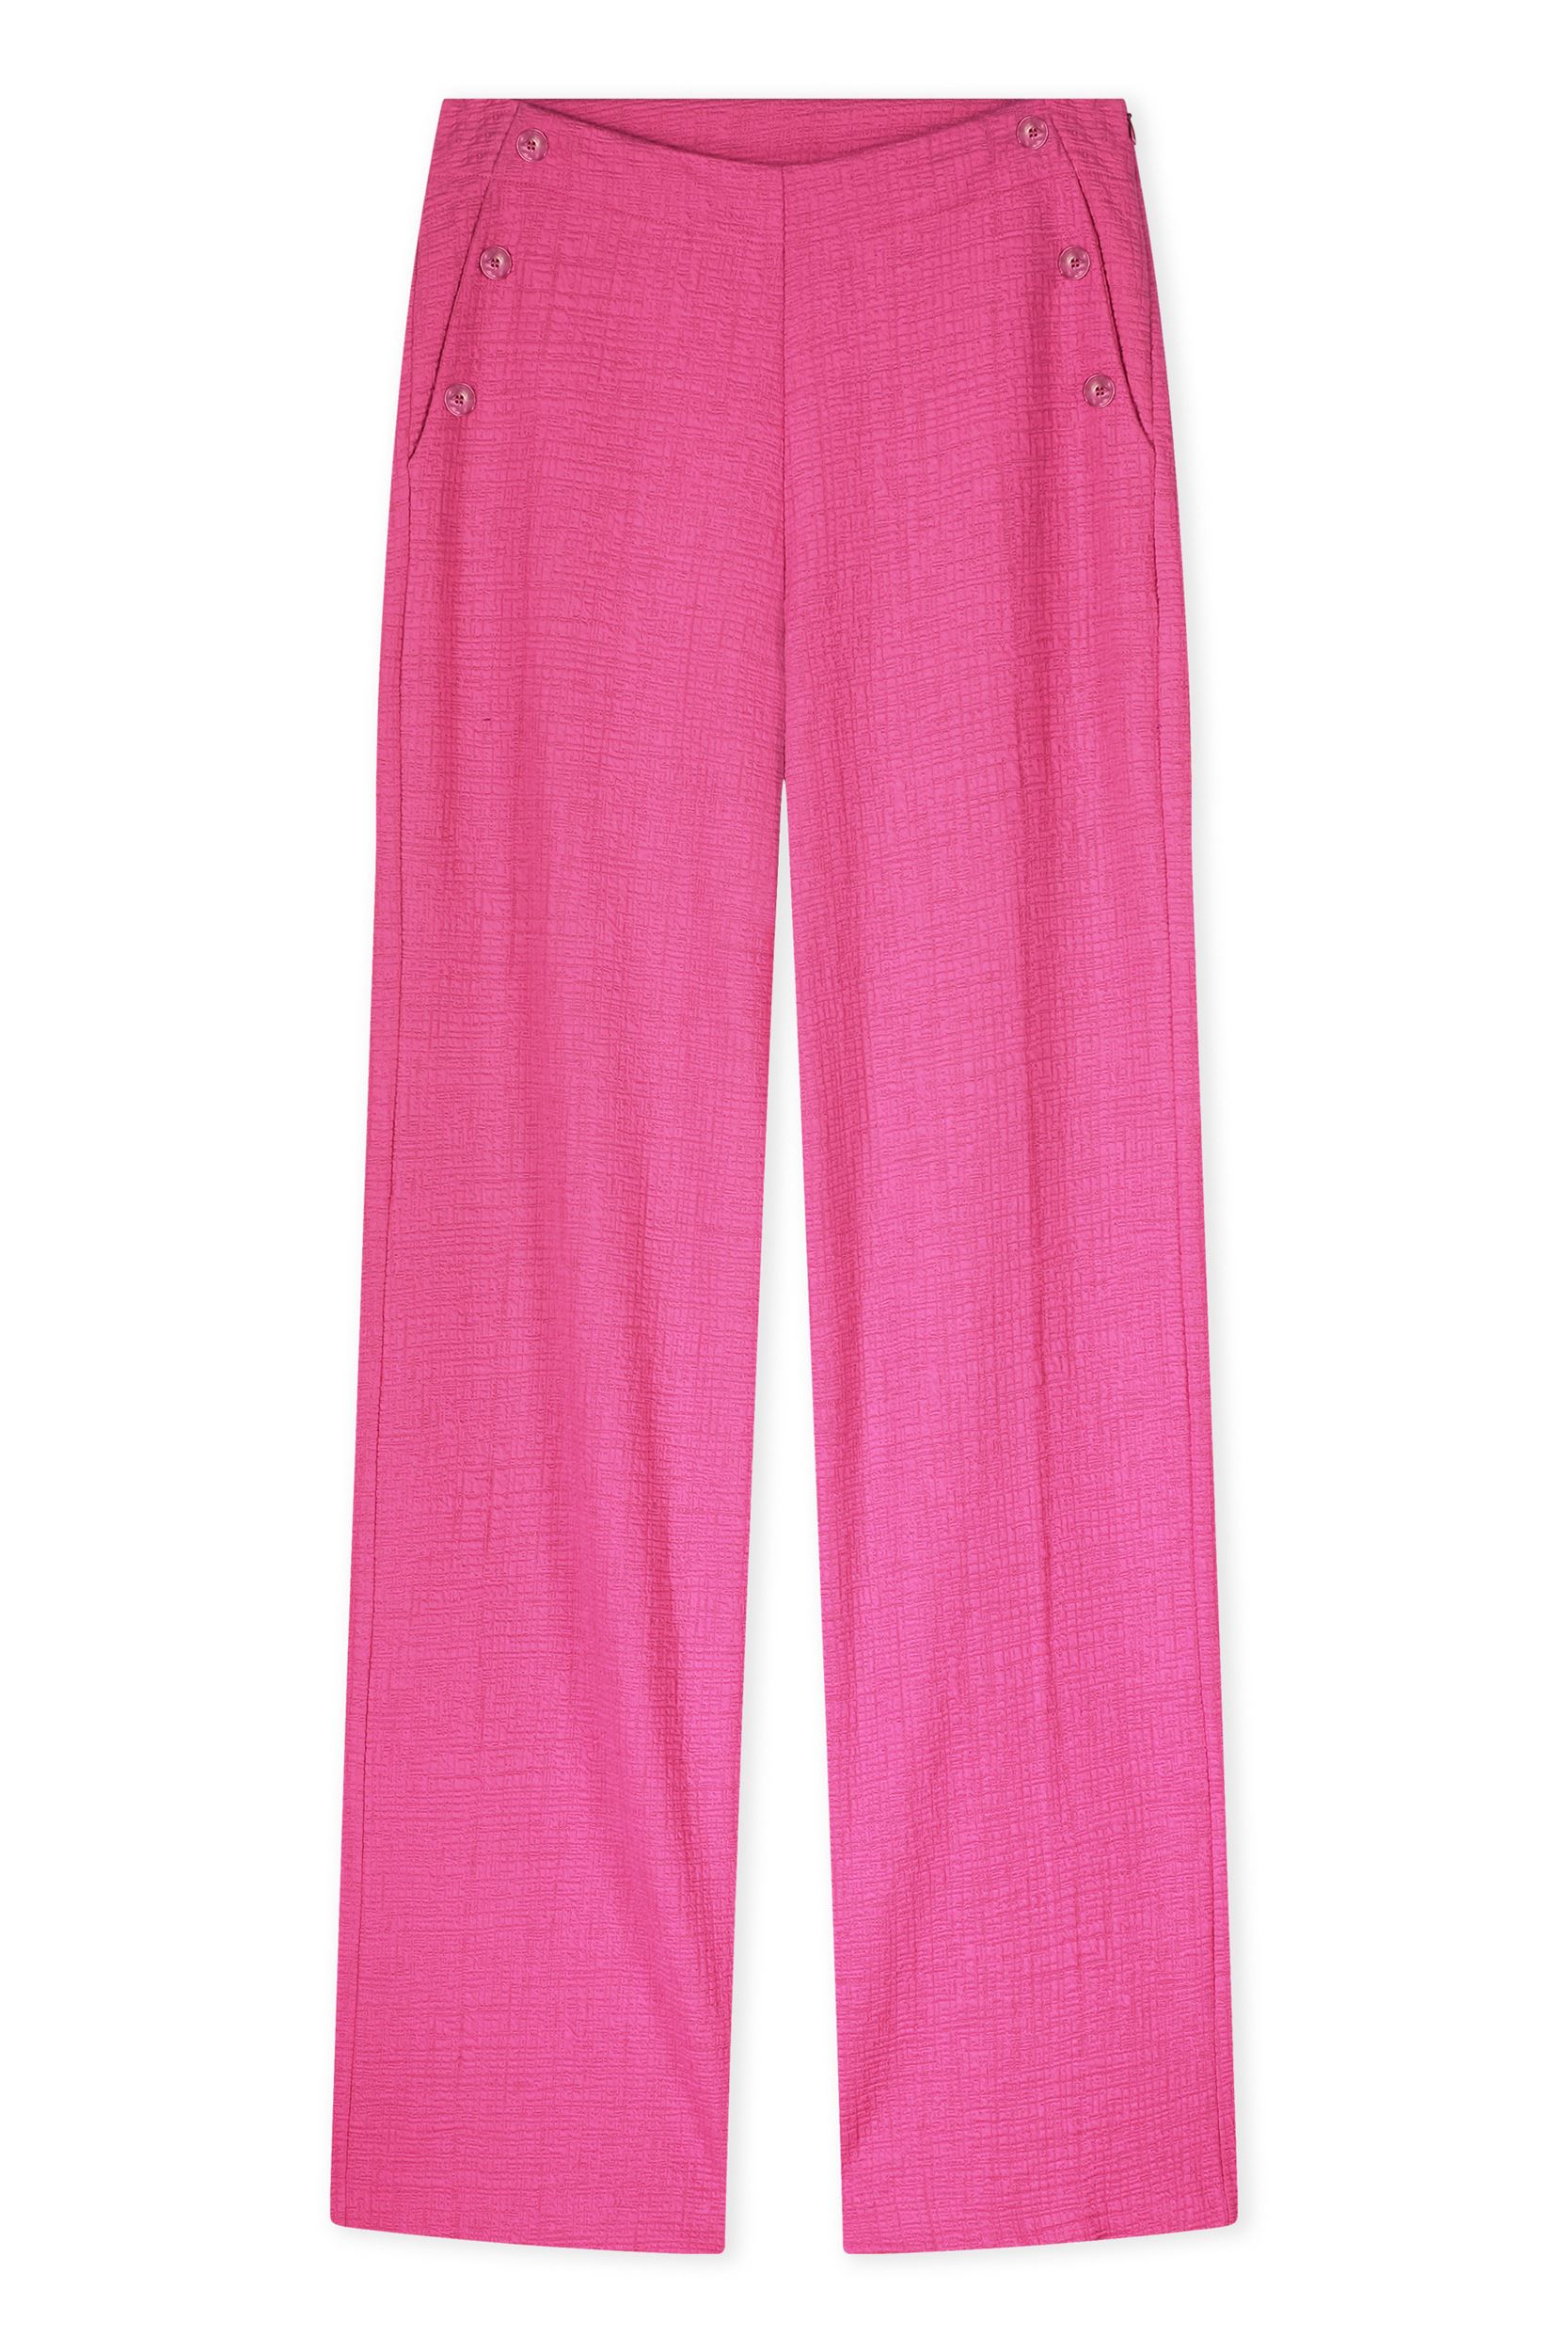 Kyra Narissa trousers pantalons roze Dames maat 44